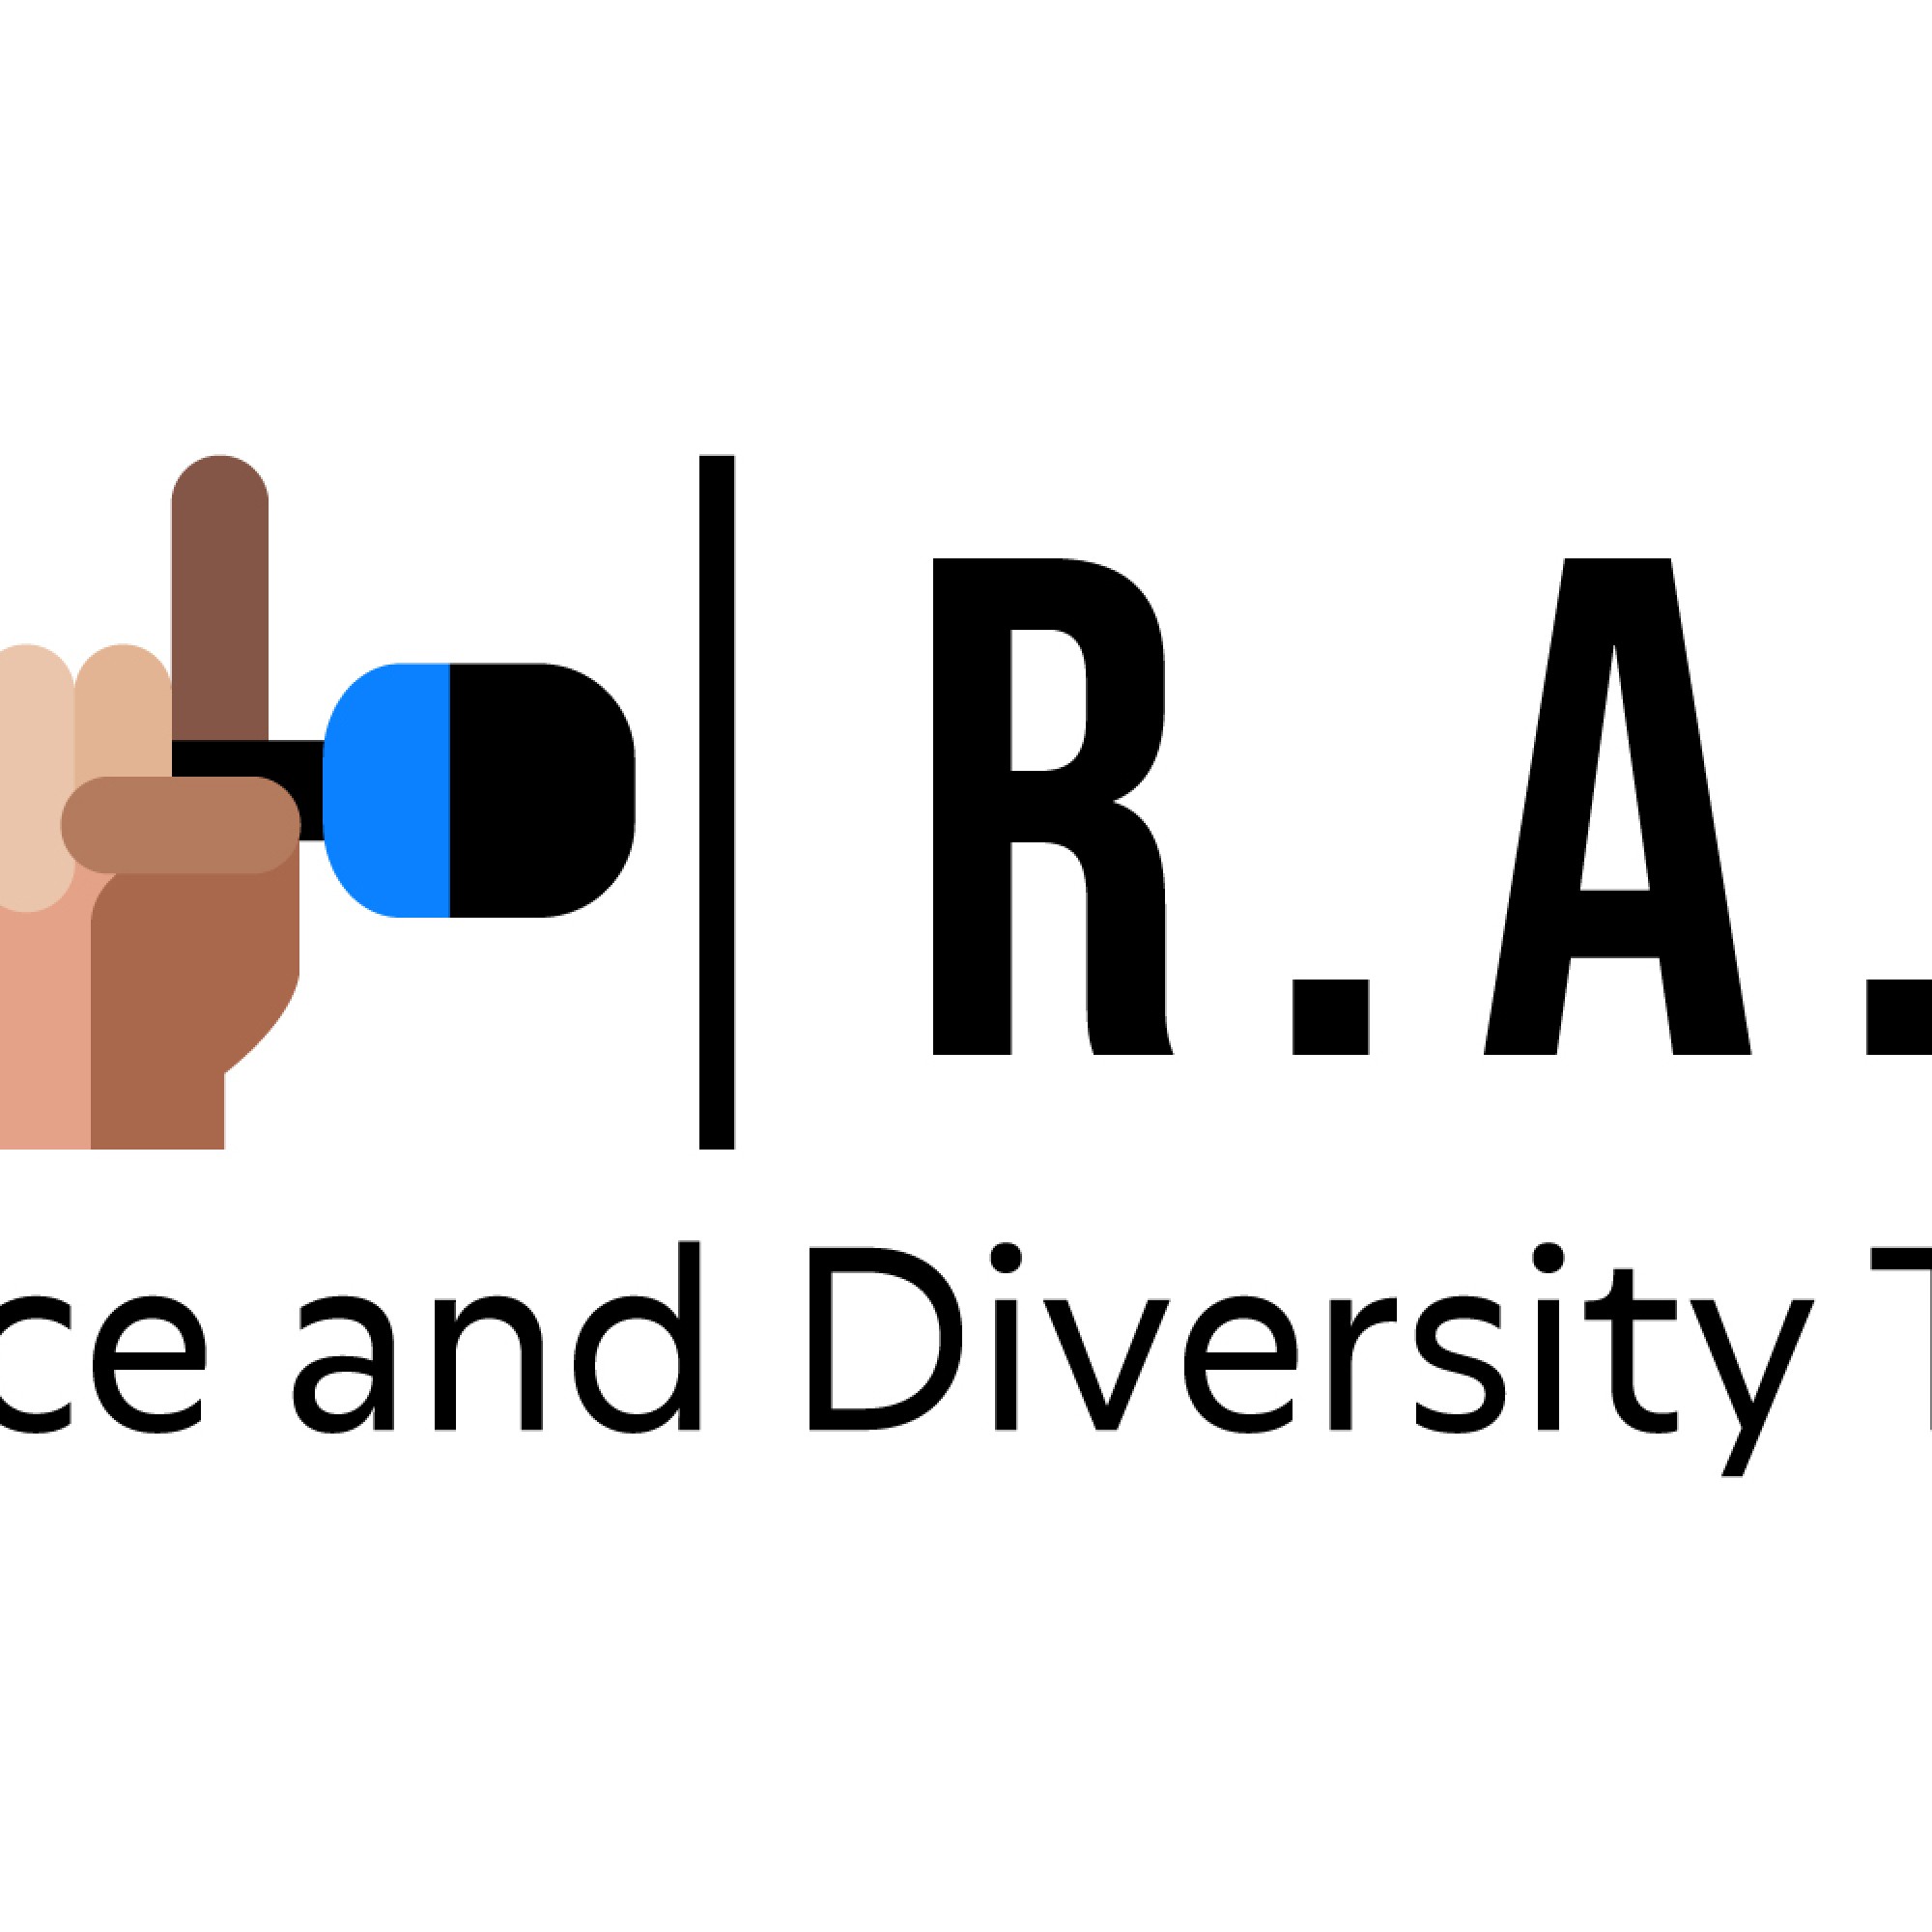 R.A.D. Race and Diversity Talk